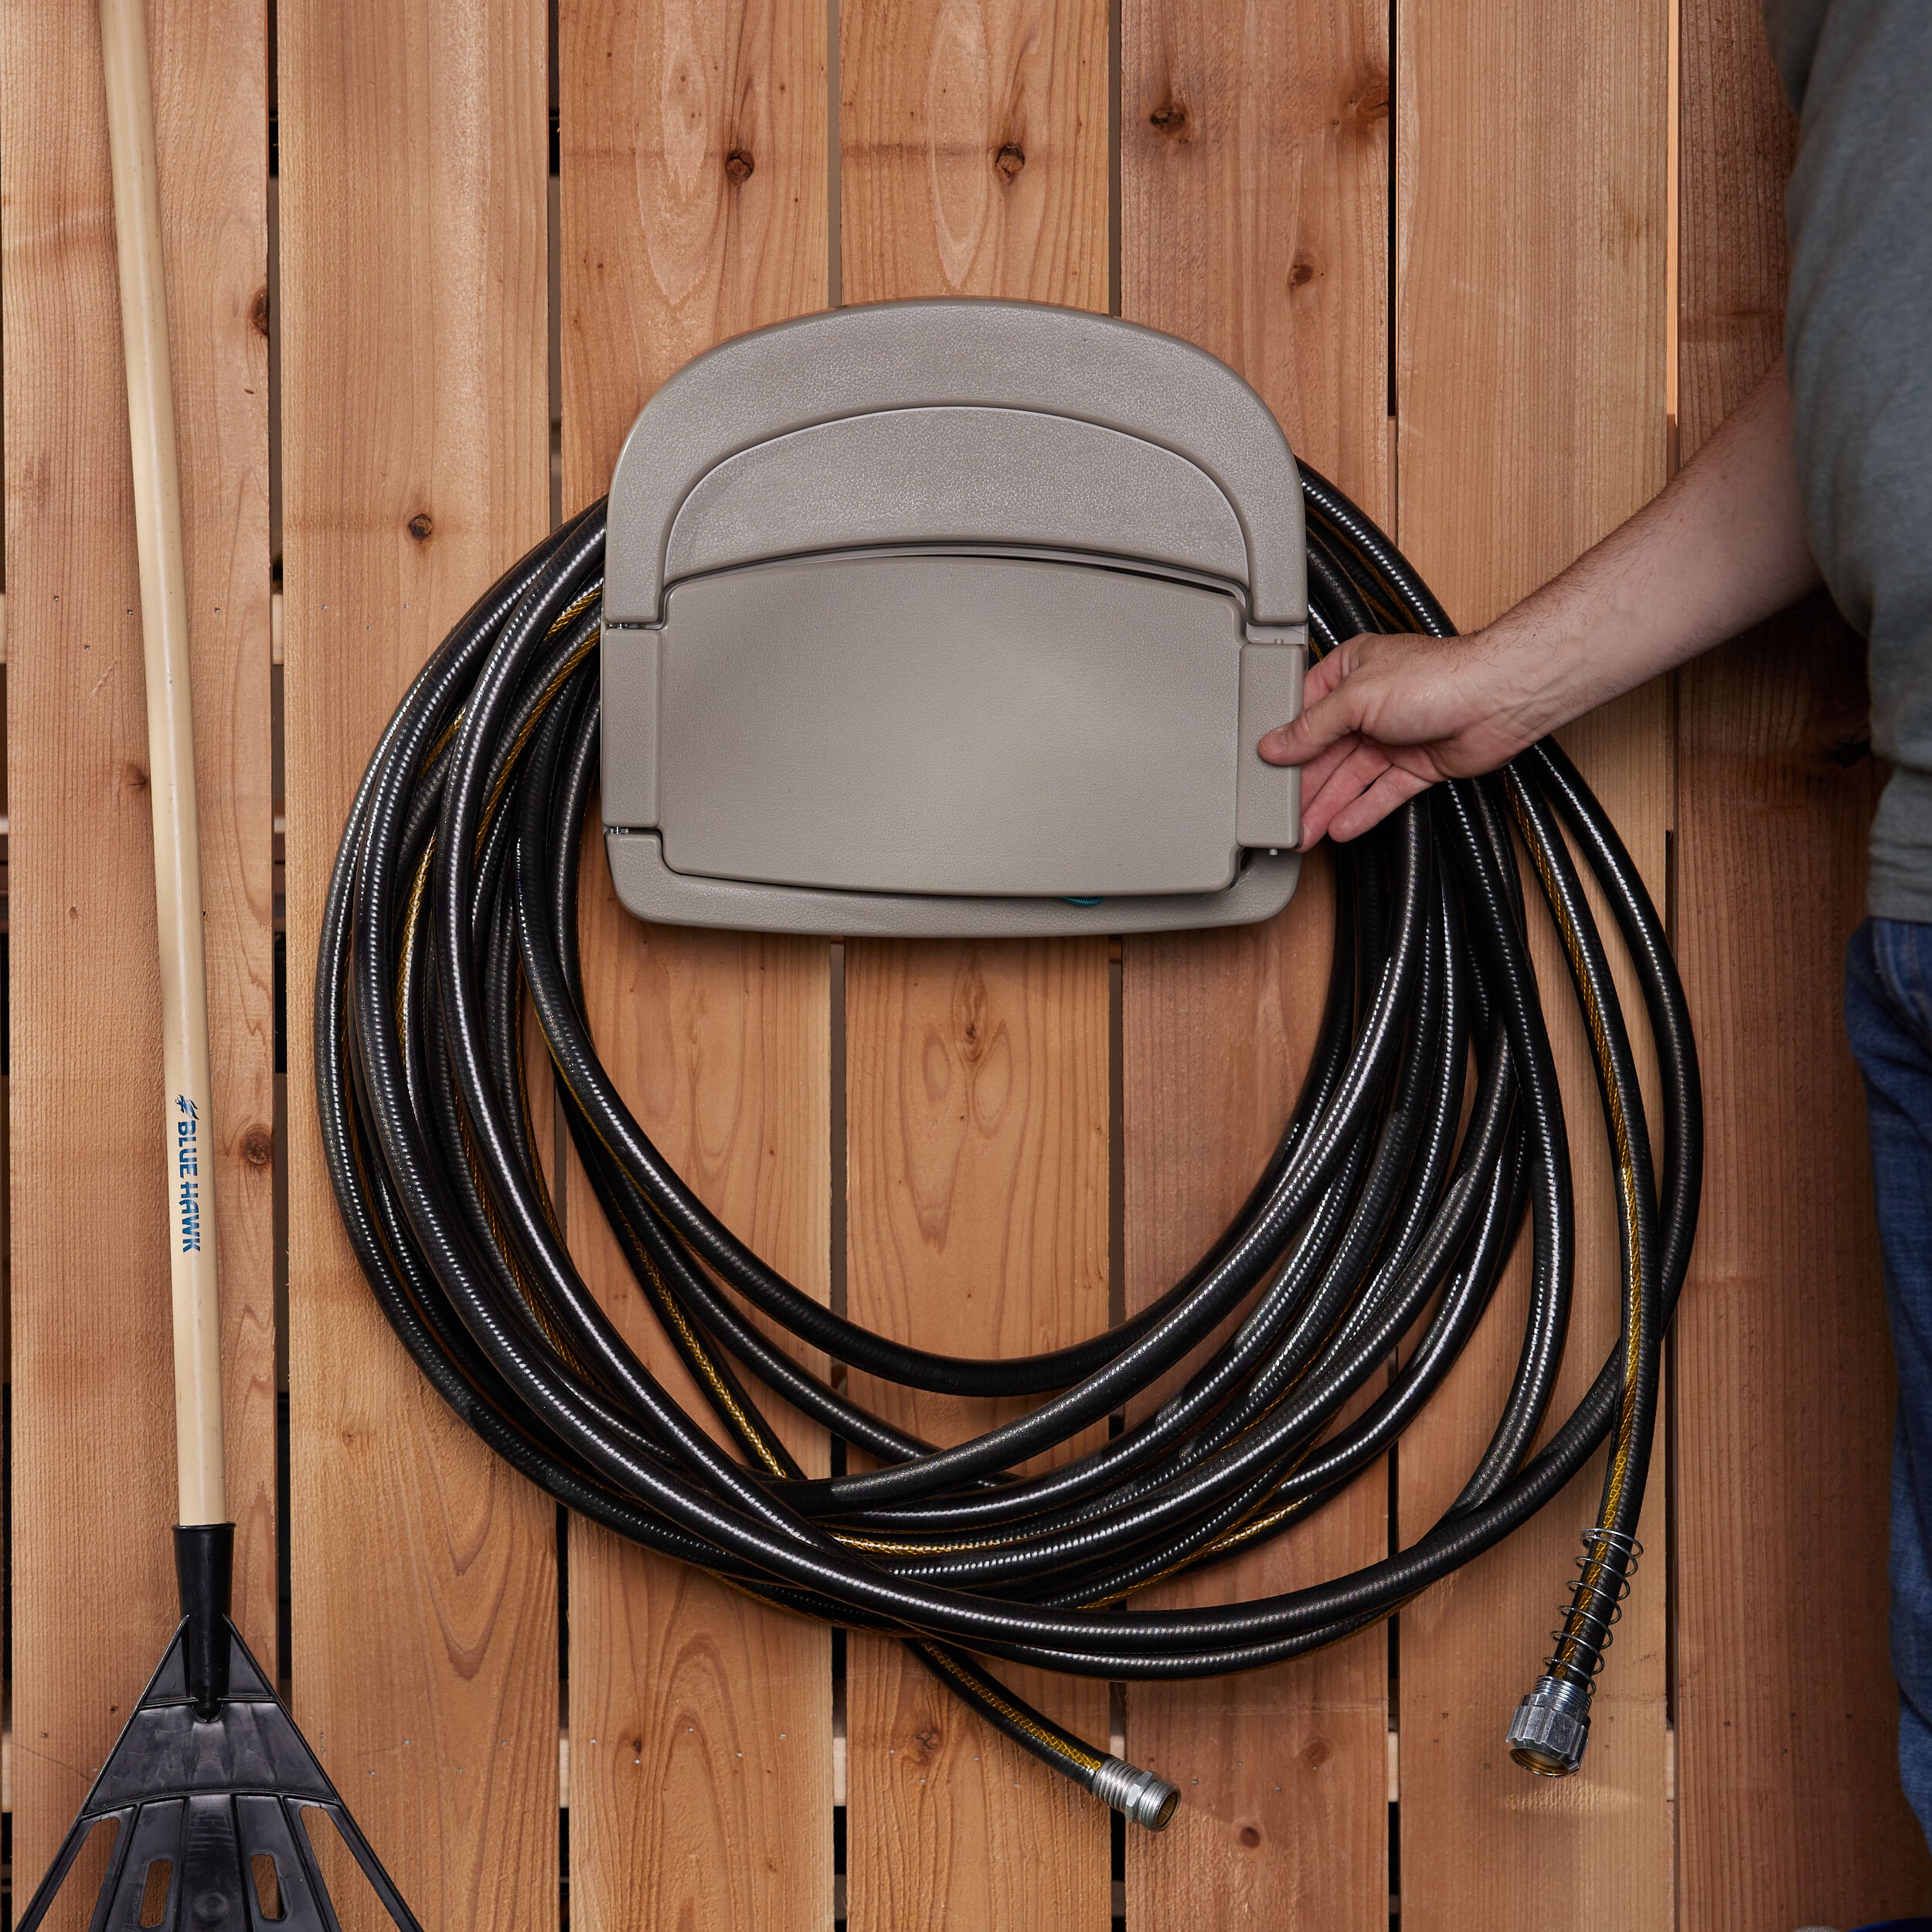 mounting hose reel to vinyl siding - Google Search  Garden hose storage,  Garden hose holder, Garden hose hanger